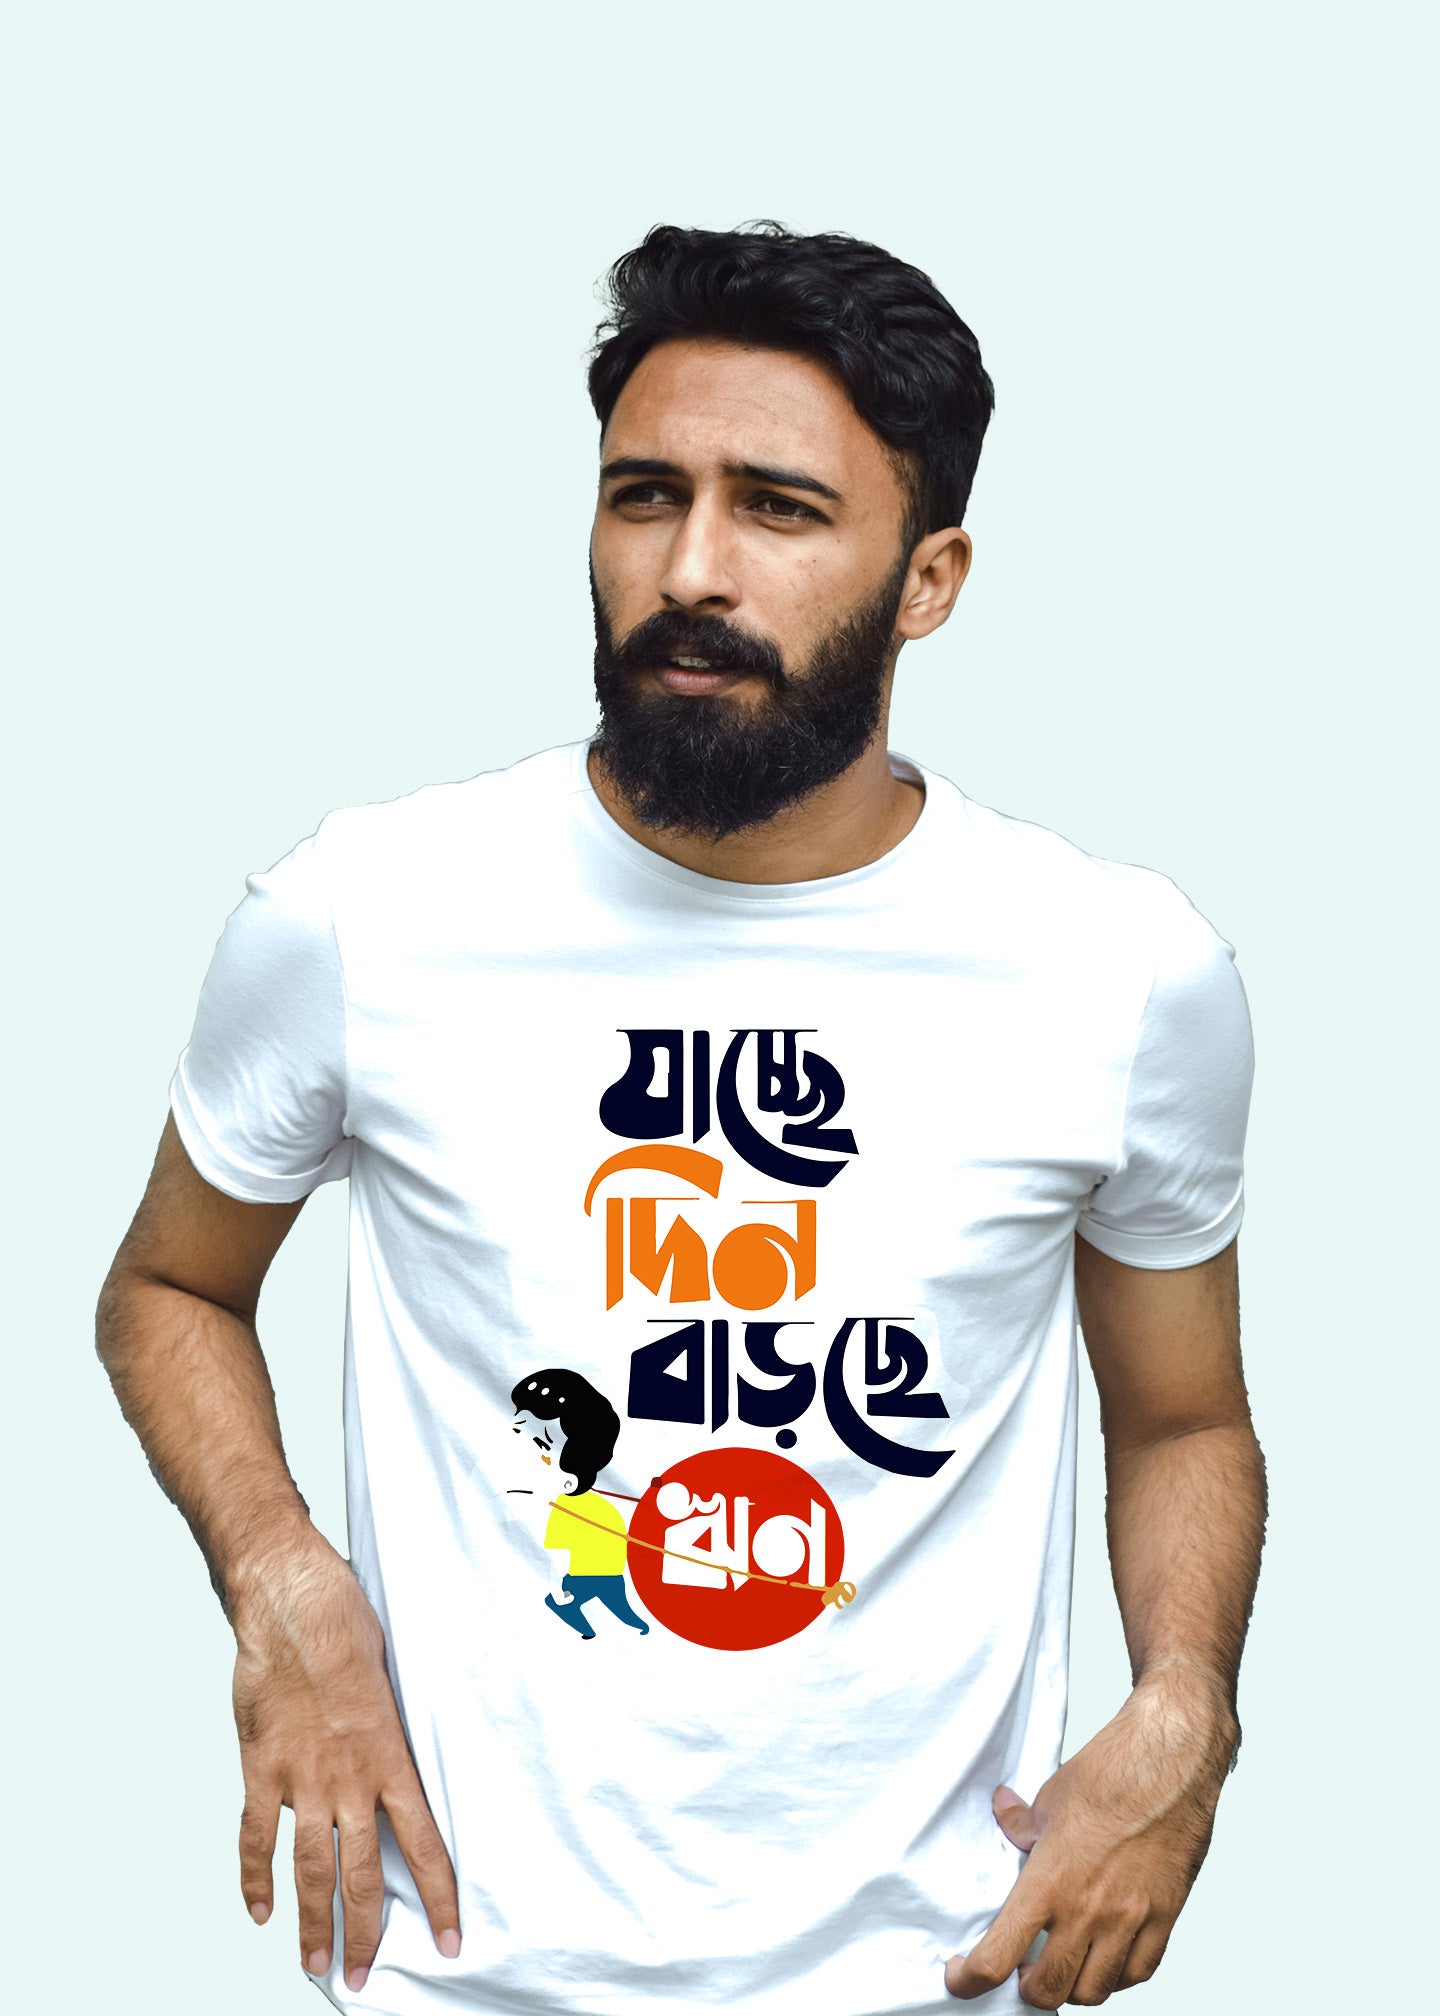 Jache din barche rin bengali Printed Half Sleeve Premium Cotton T-shirt For Men